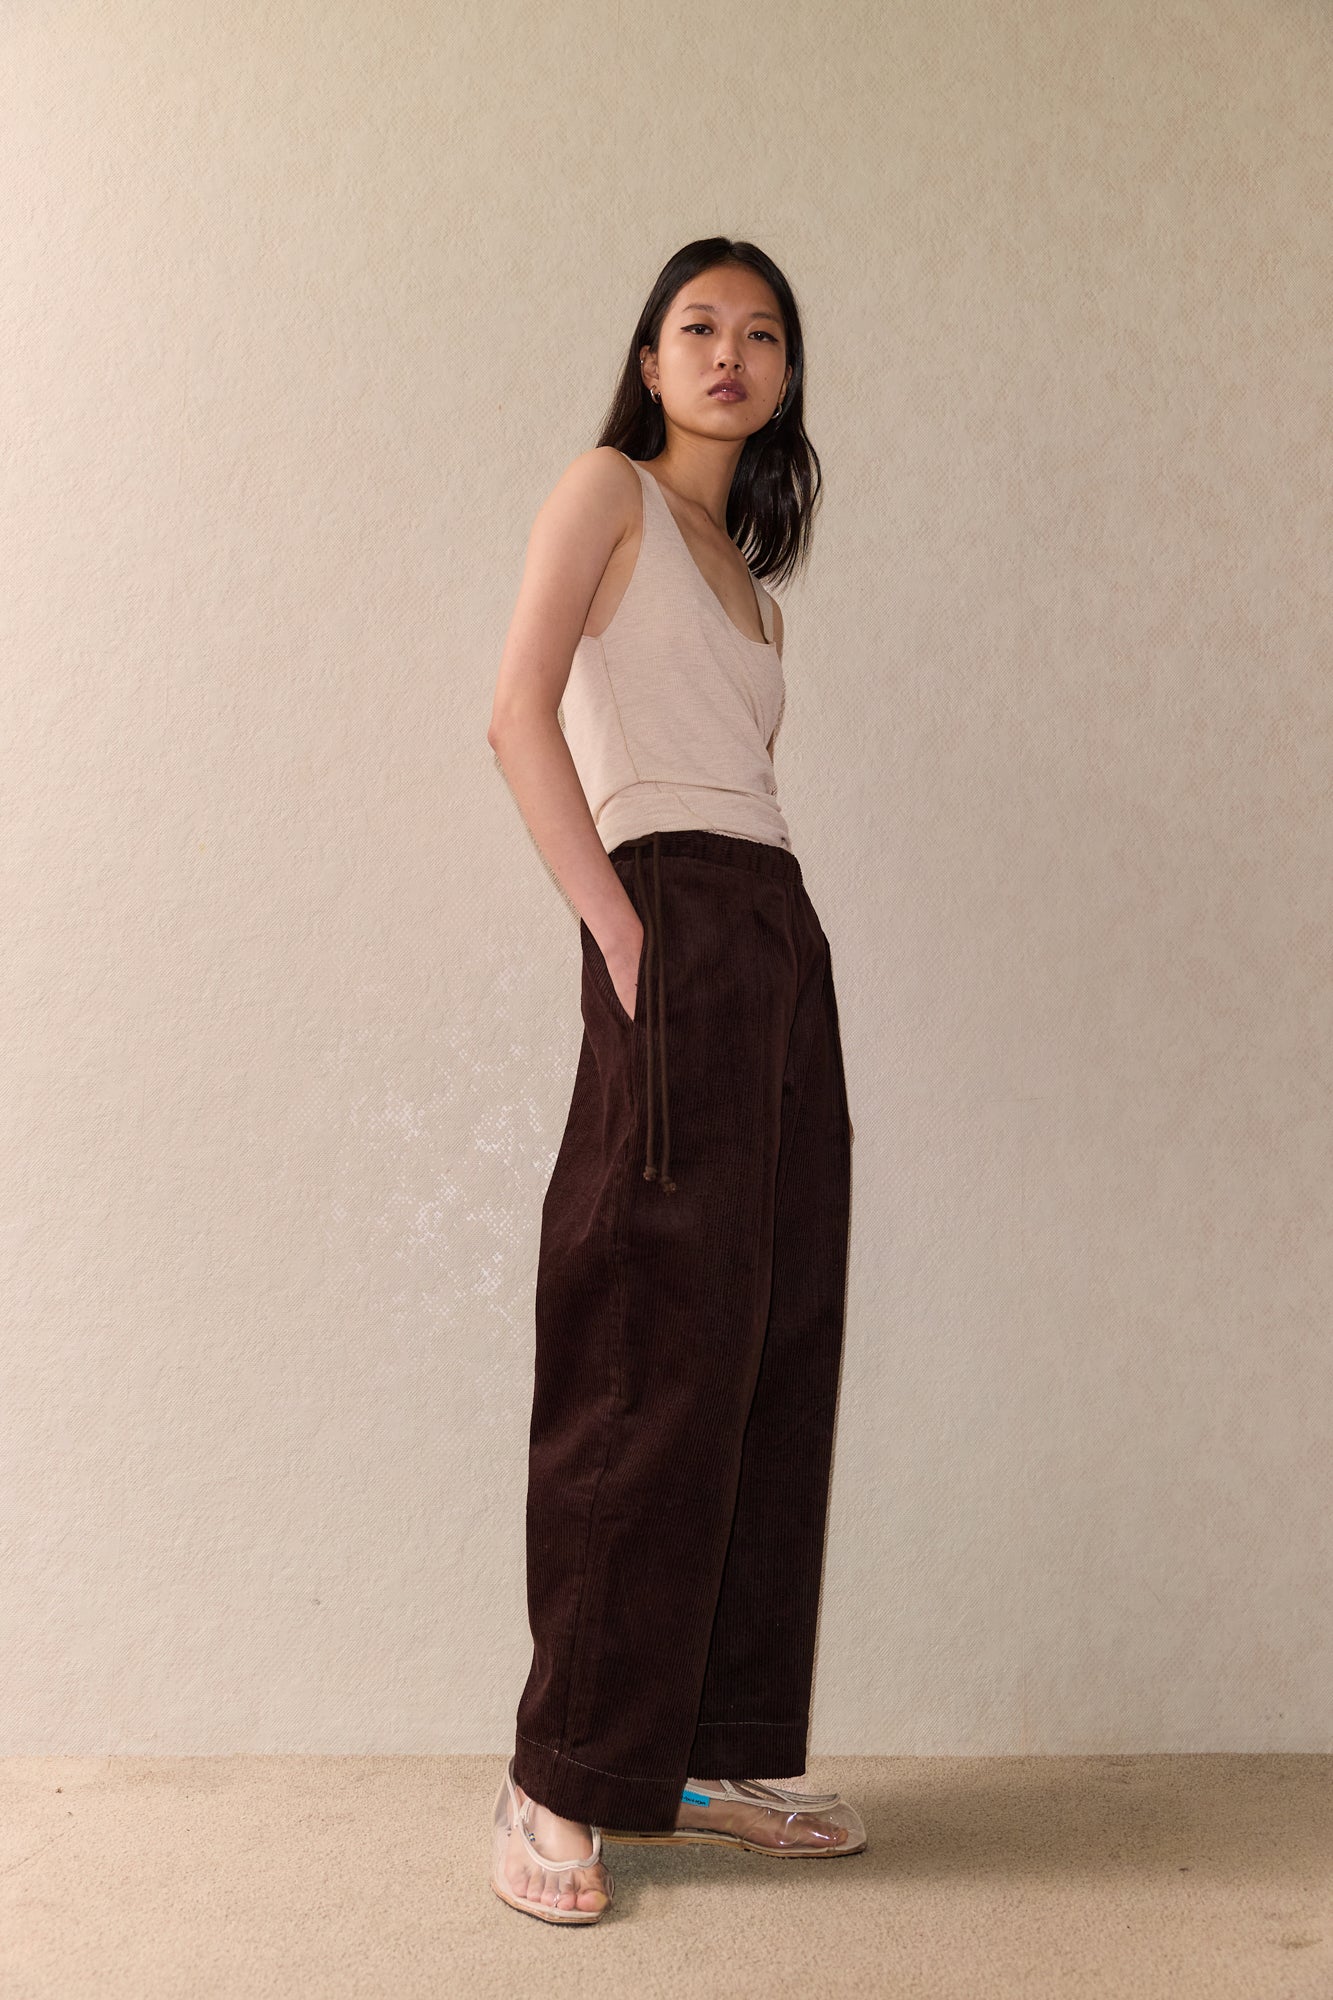 Female model wearing The Straight Cord Pant - Cedar by Deiji Studios against plain background